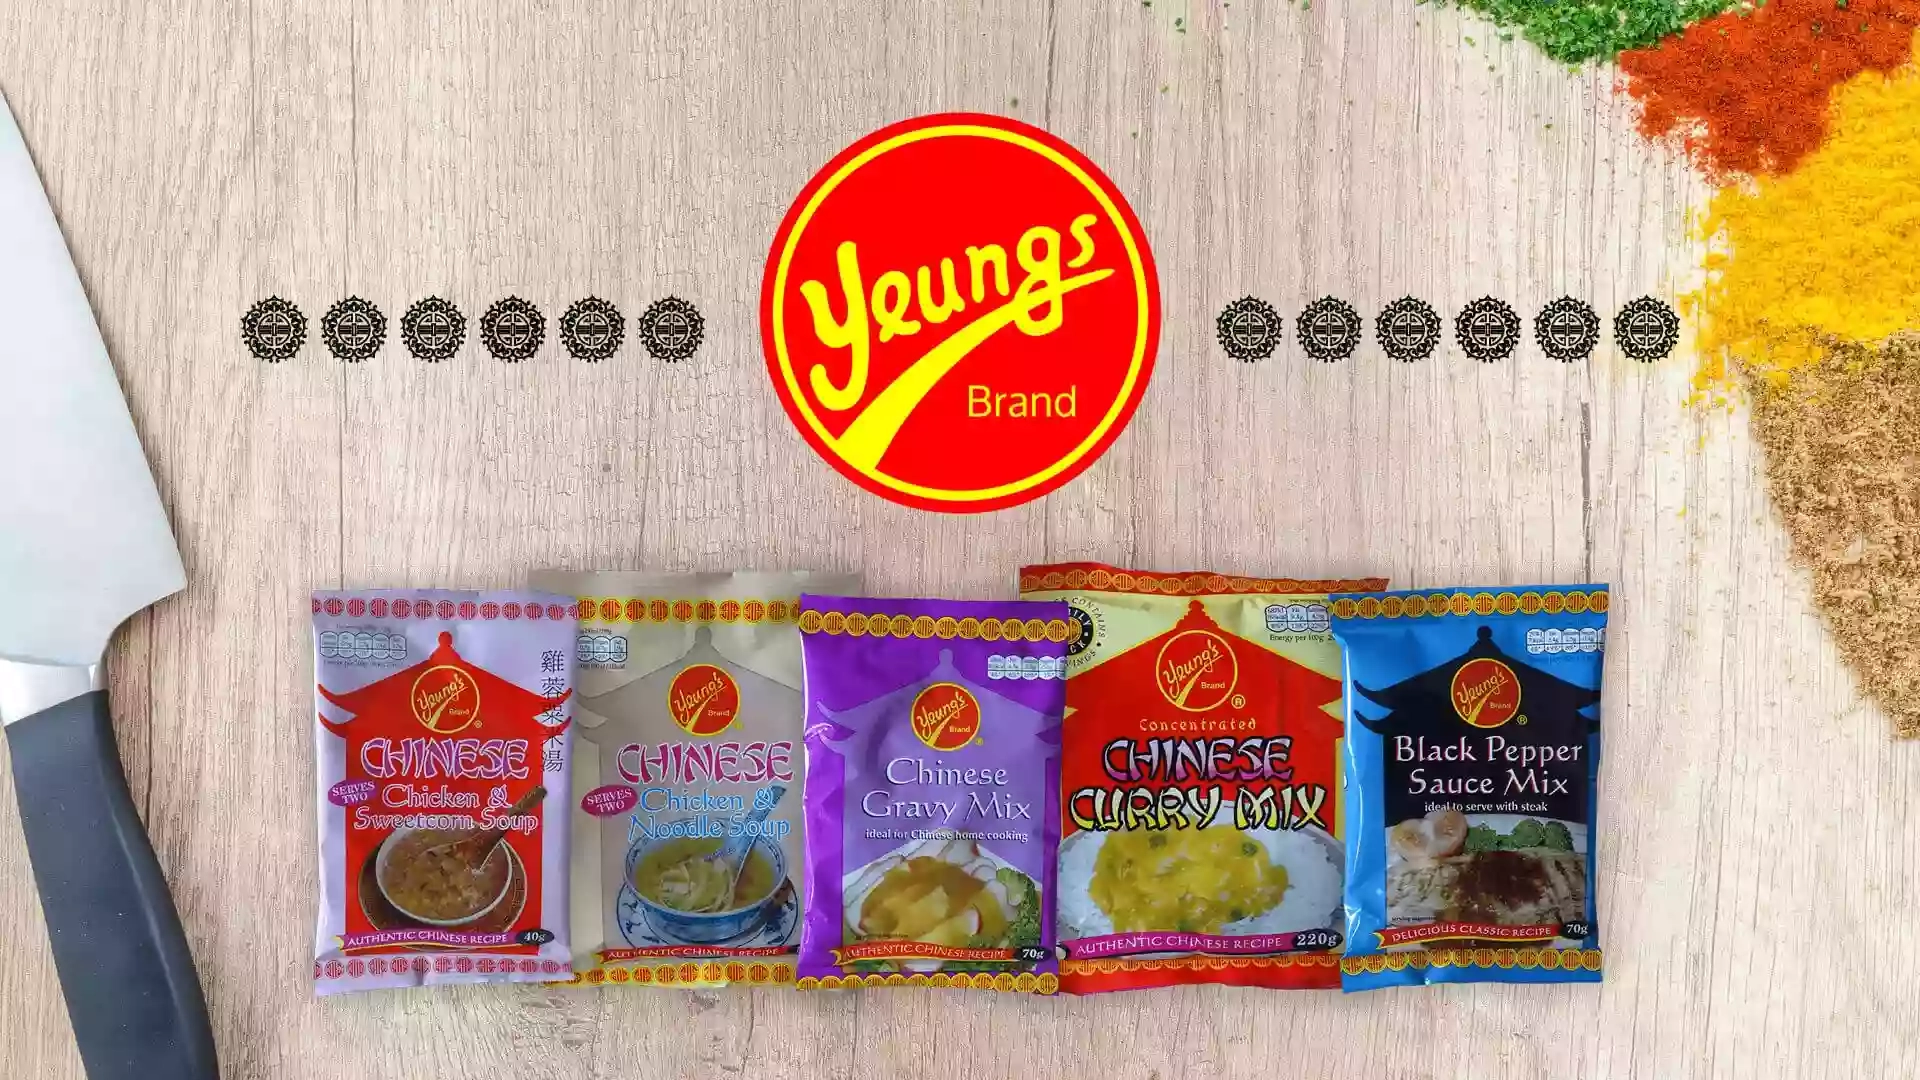 Yeungs Chinese Foods Ltd